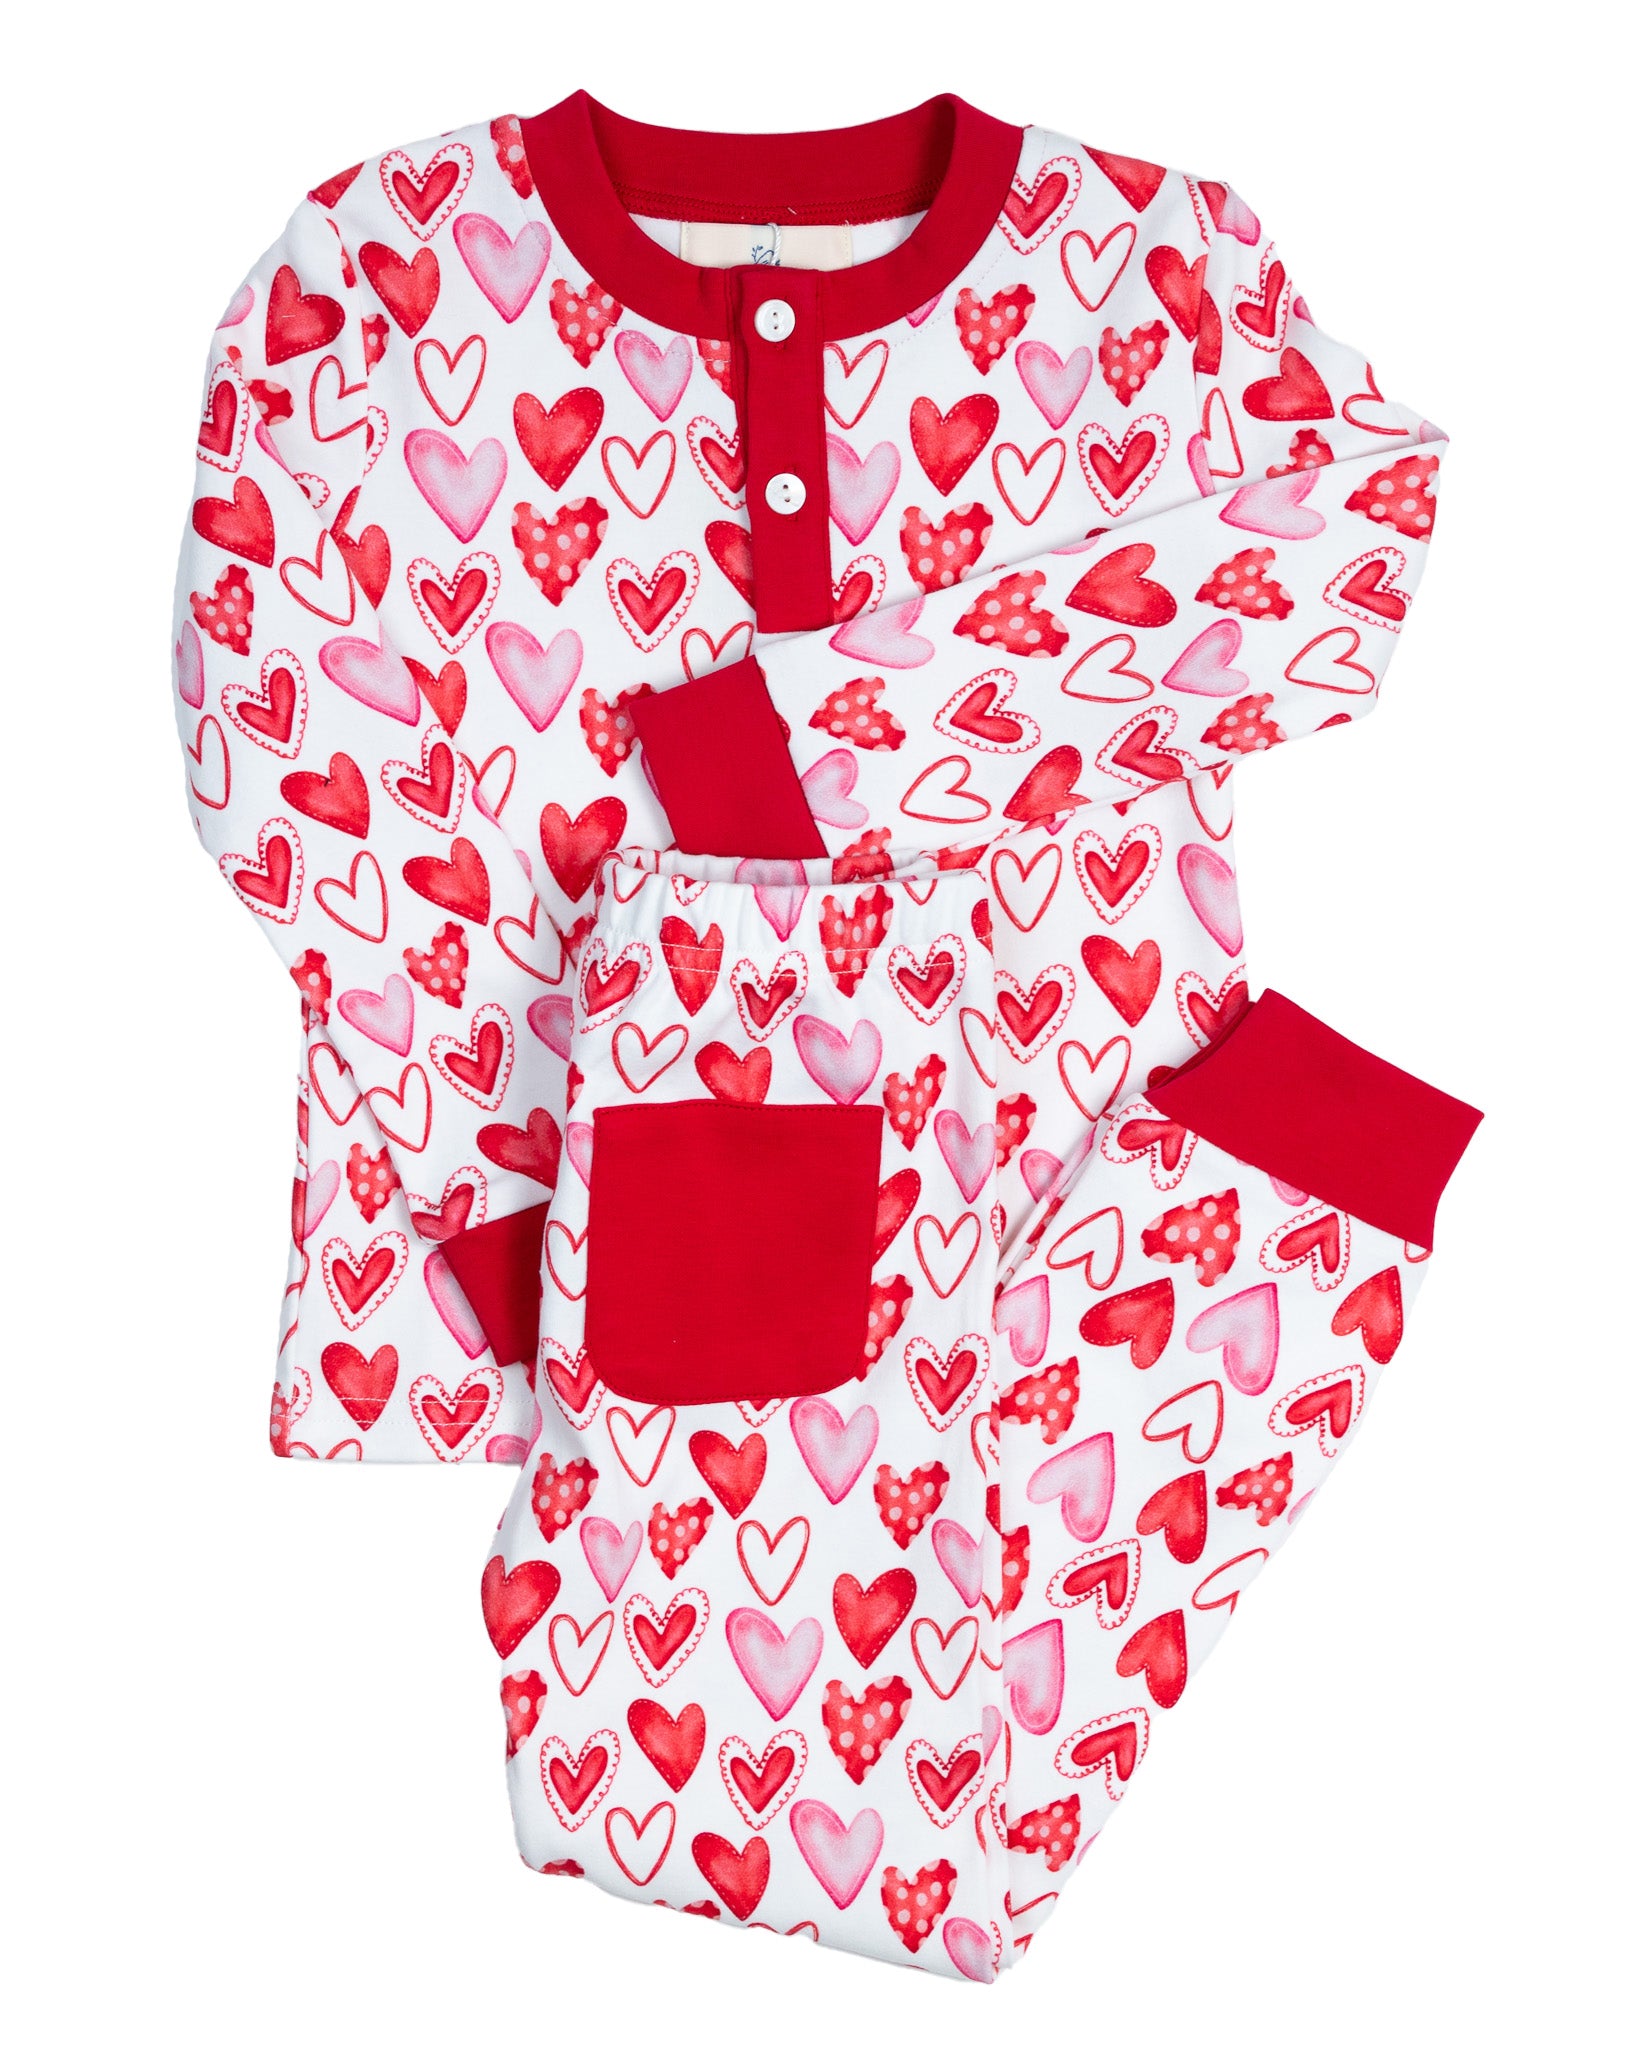 Whimsical Hearts Pajama Set- FINAL SALE